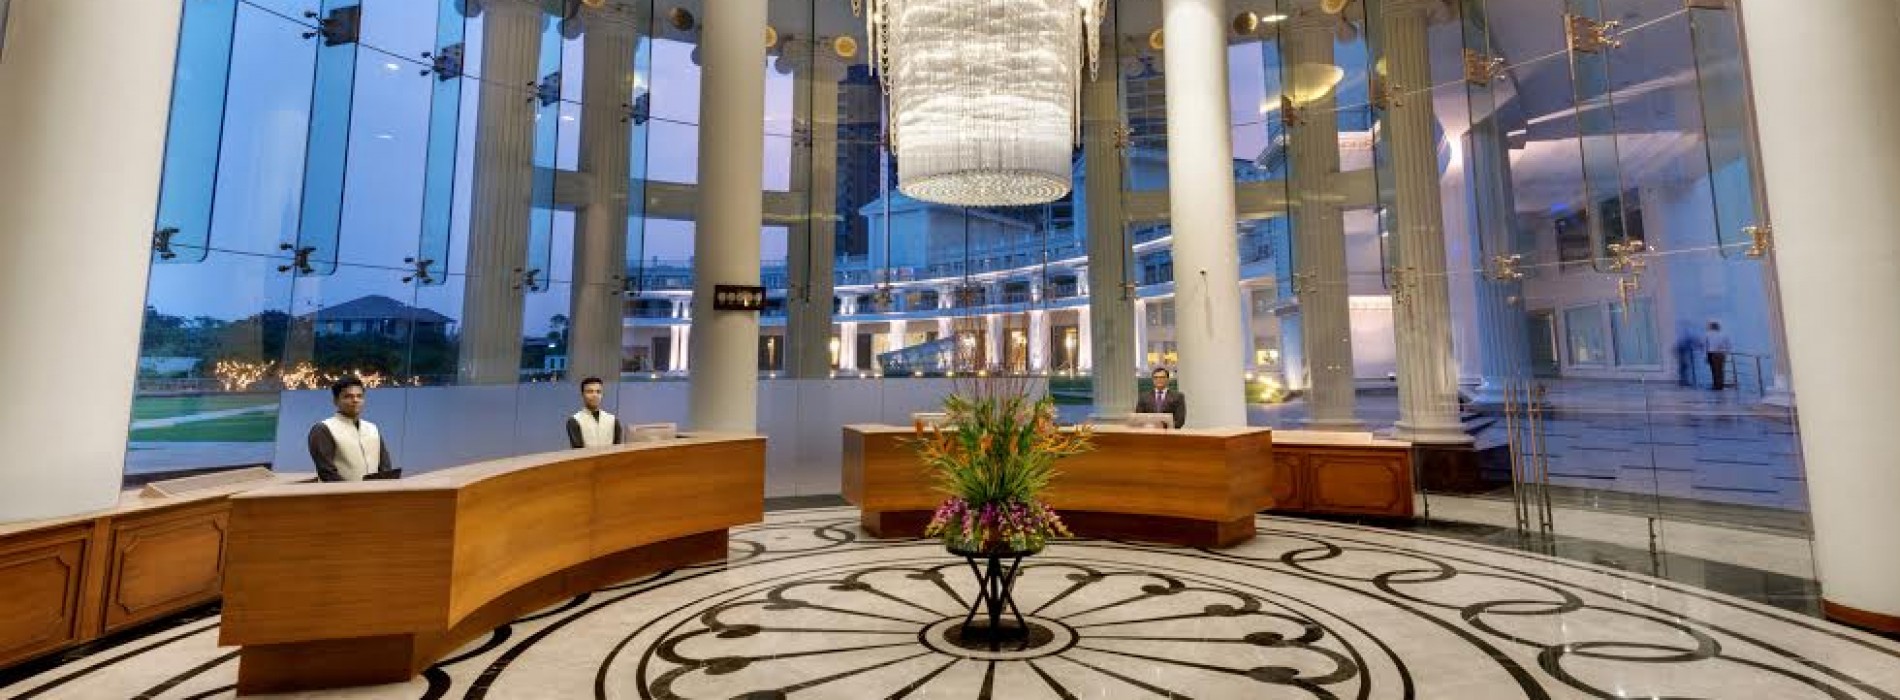 The Fern Hotels & Resorts adds 31st hotel to its portfolio